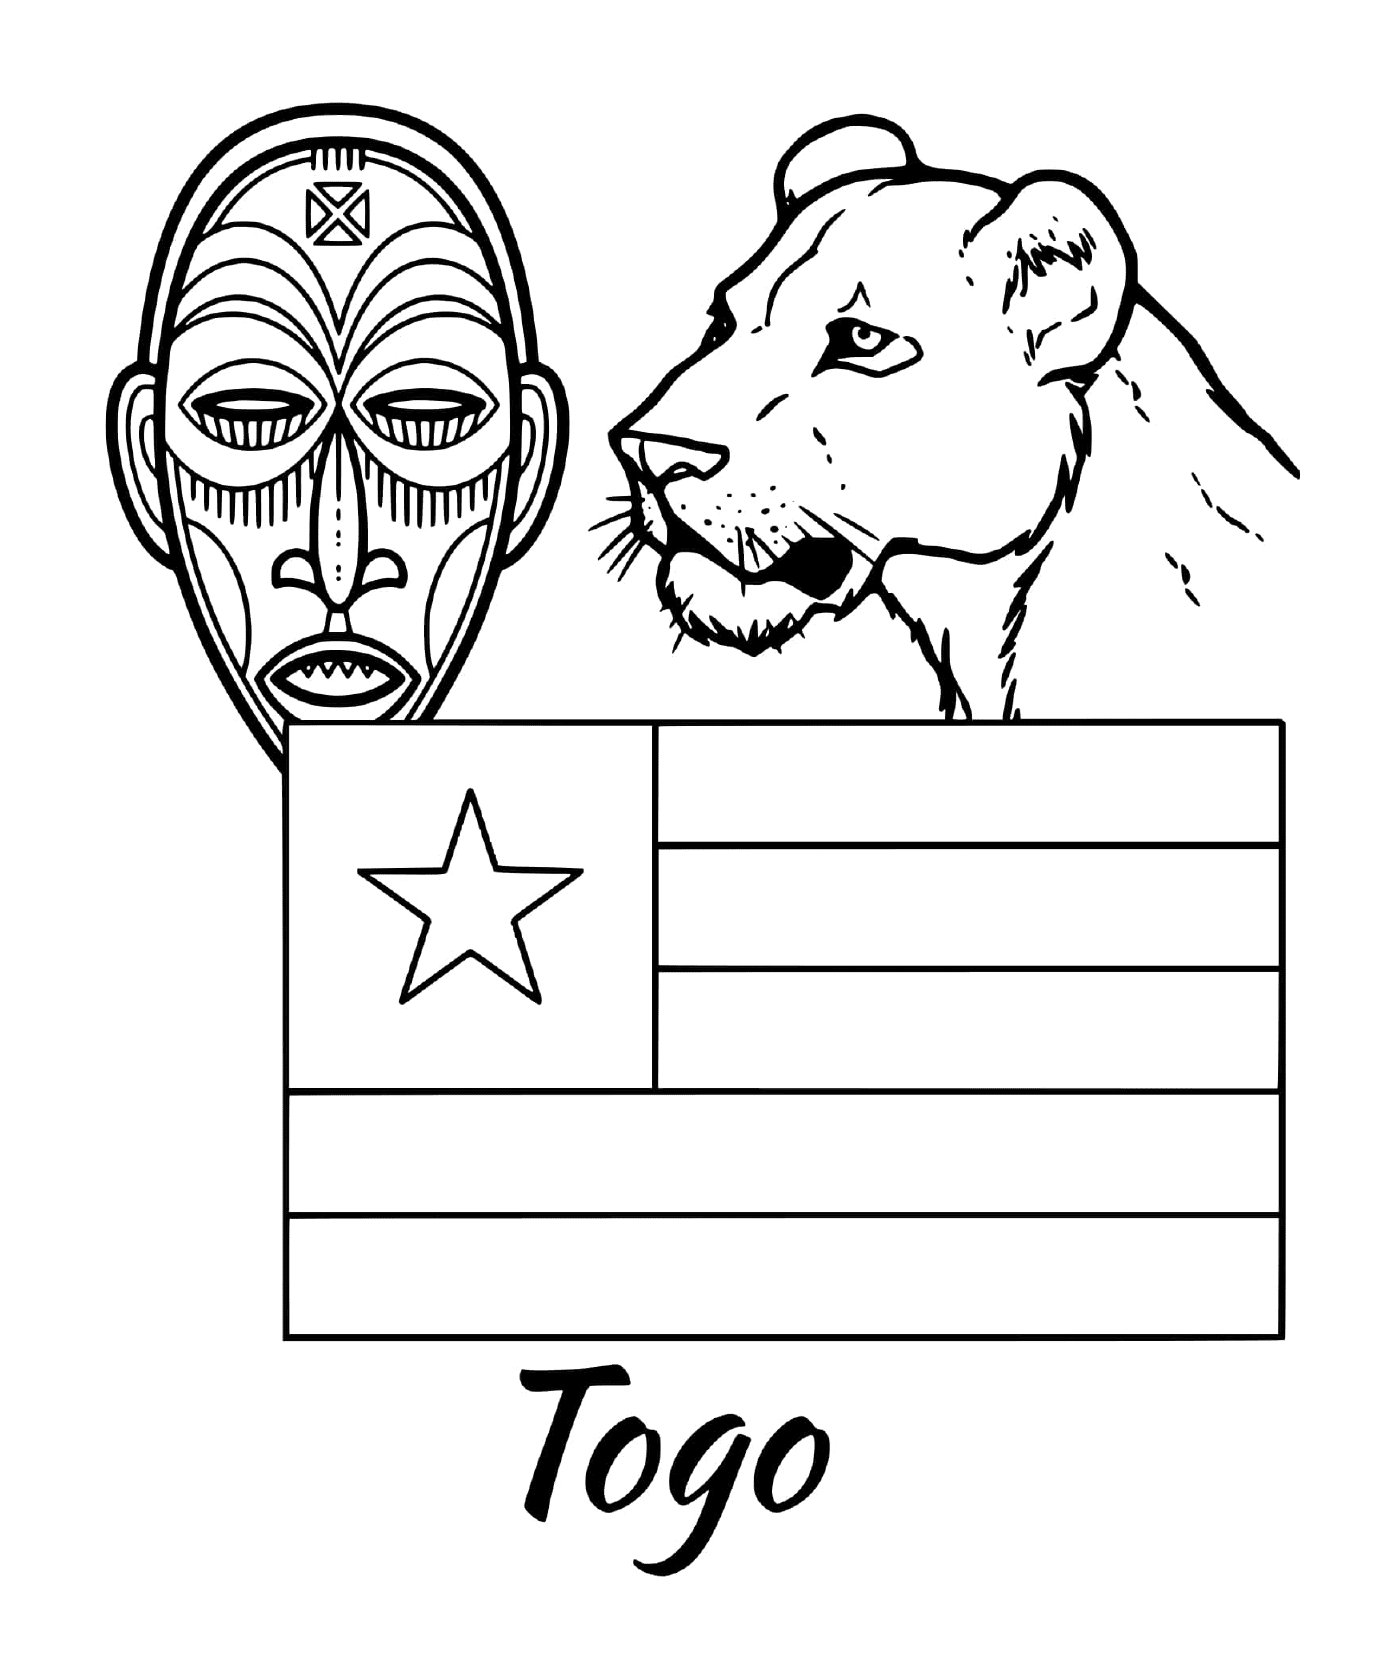 togo drapeau tribal mask